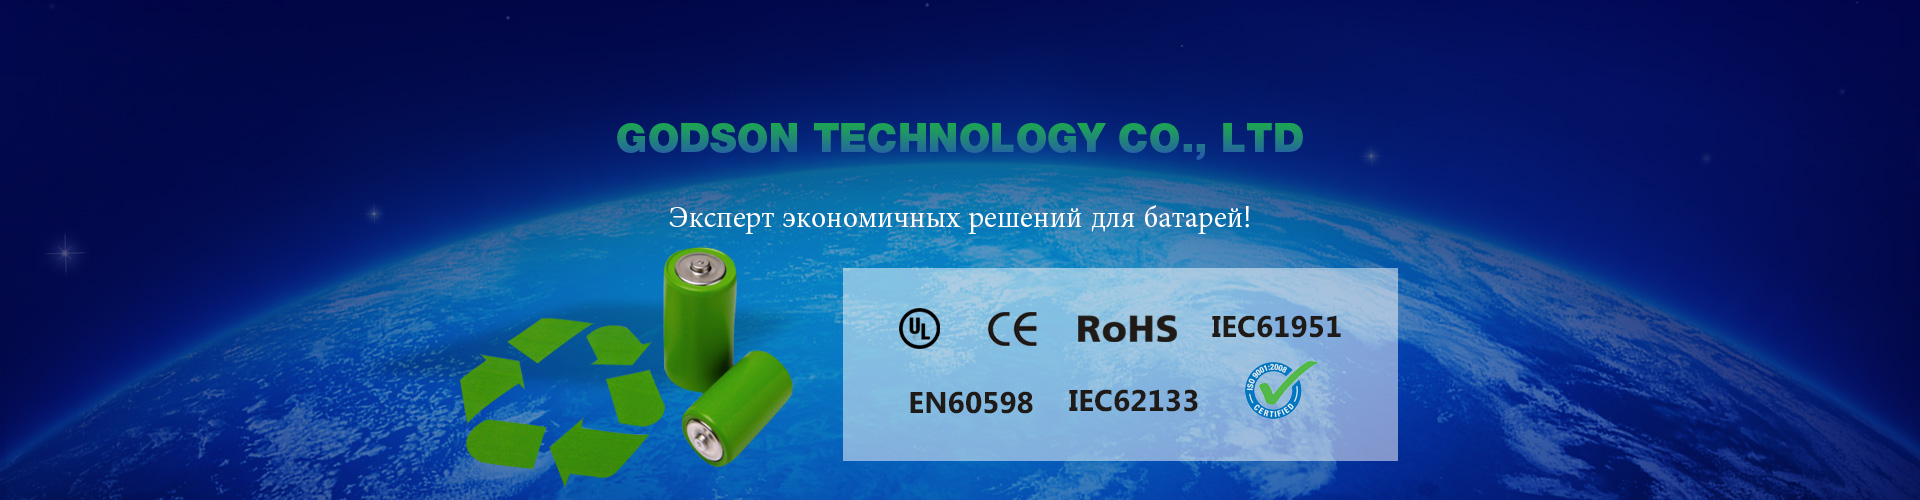 Godson Technology Co., Ltd. 